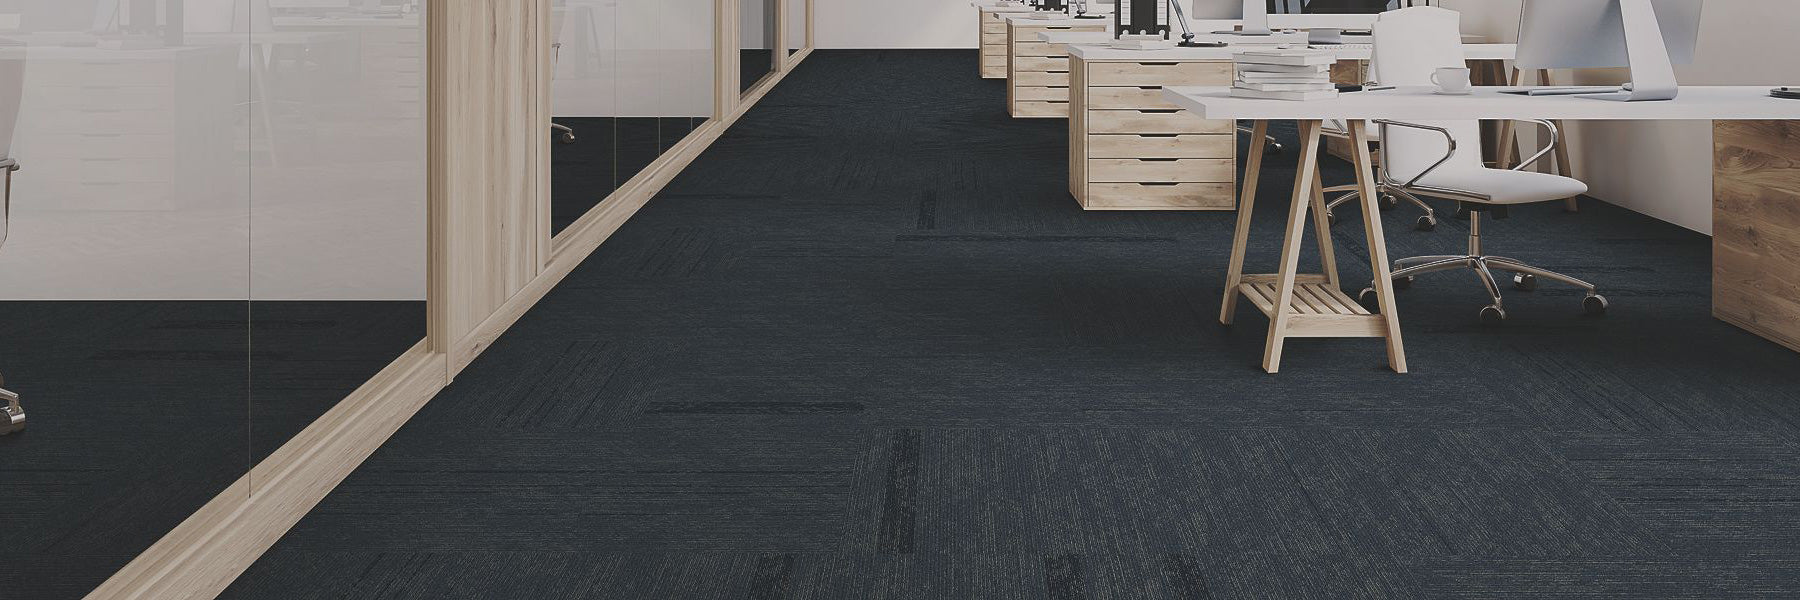 Aladdin Commercial Carpet Tile